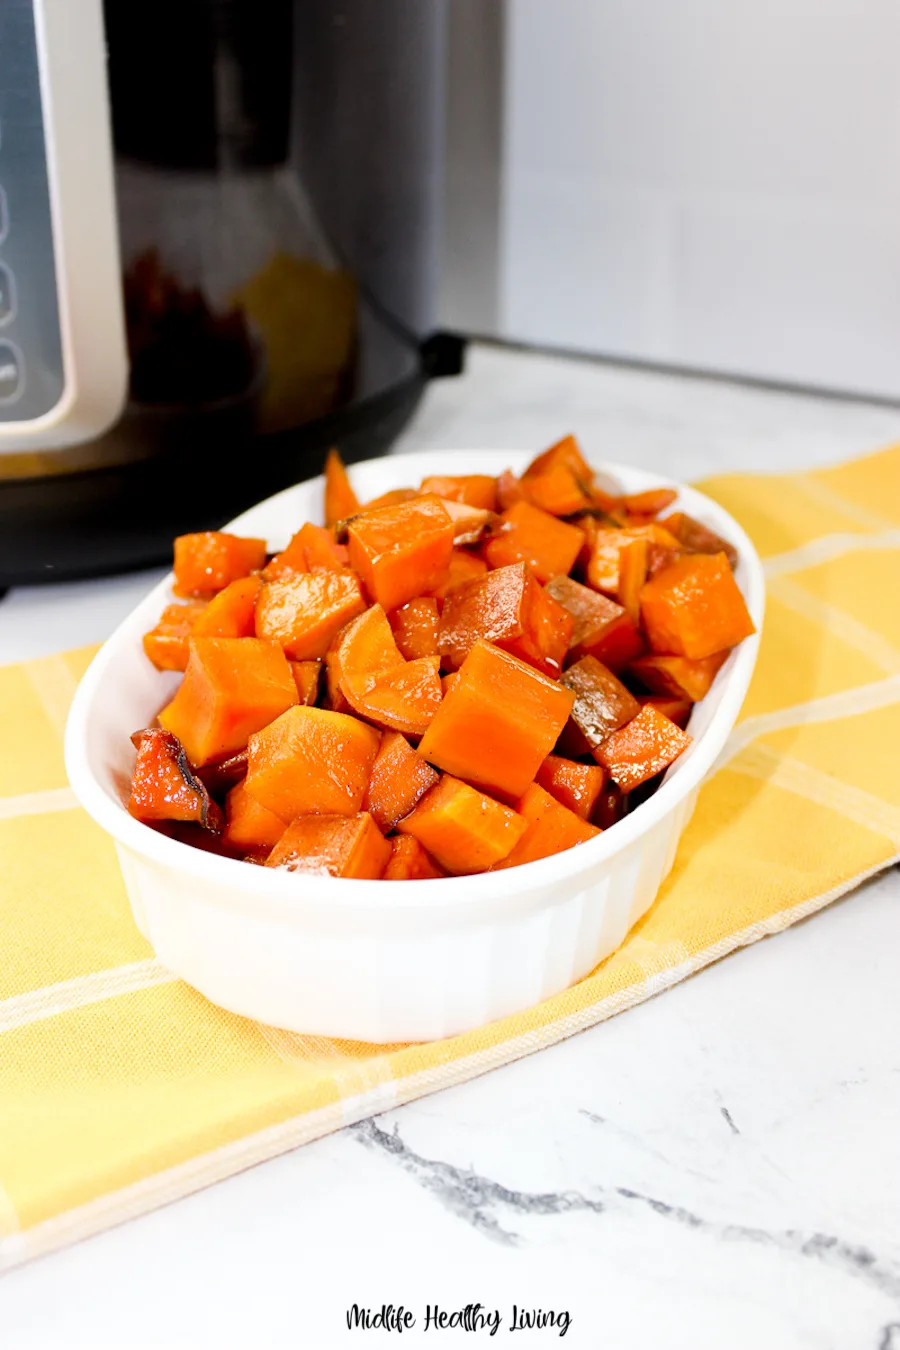 Instant Pot Cubed Sweet Potatoes - Savas Kitchen